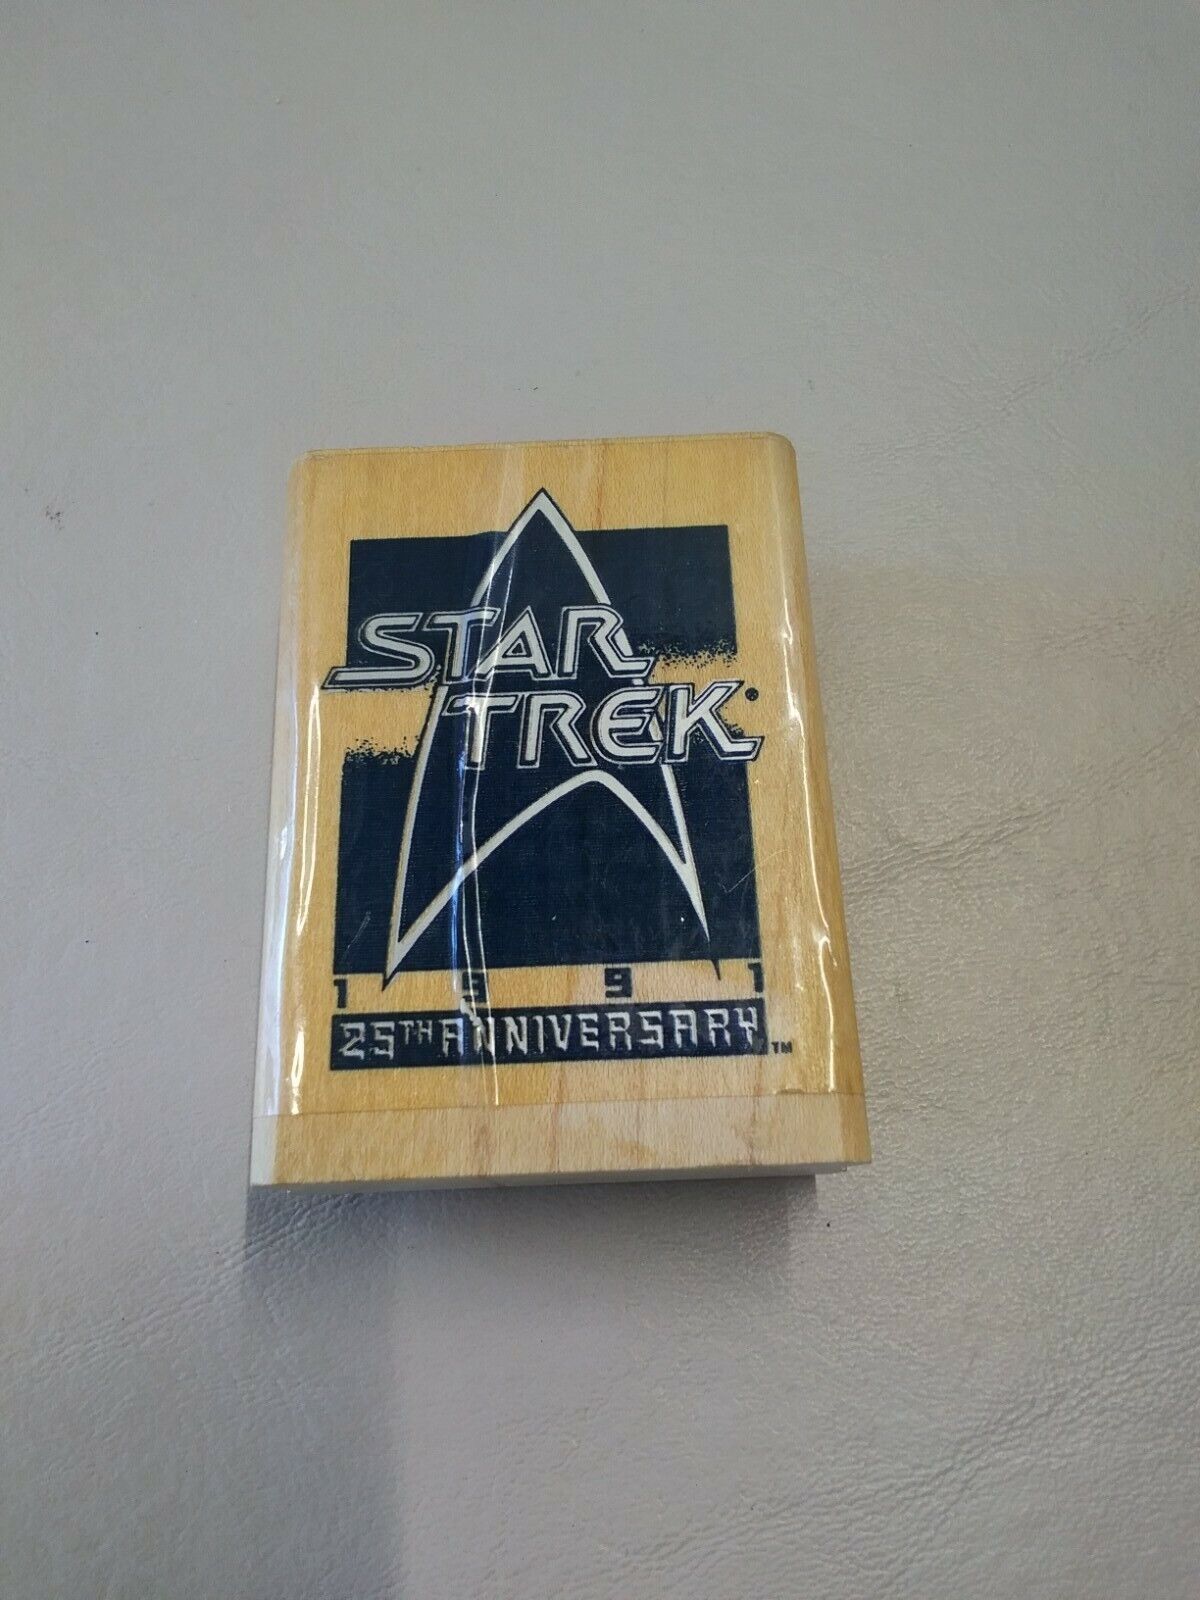 Star Trek 1991 25th Anniversary Rubber Stamp 2.75"×2" 